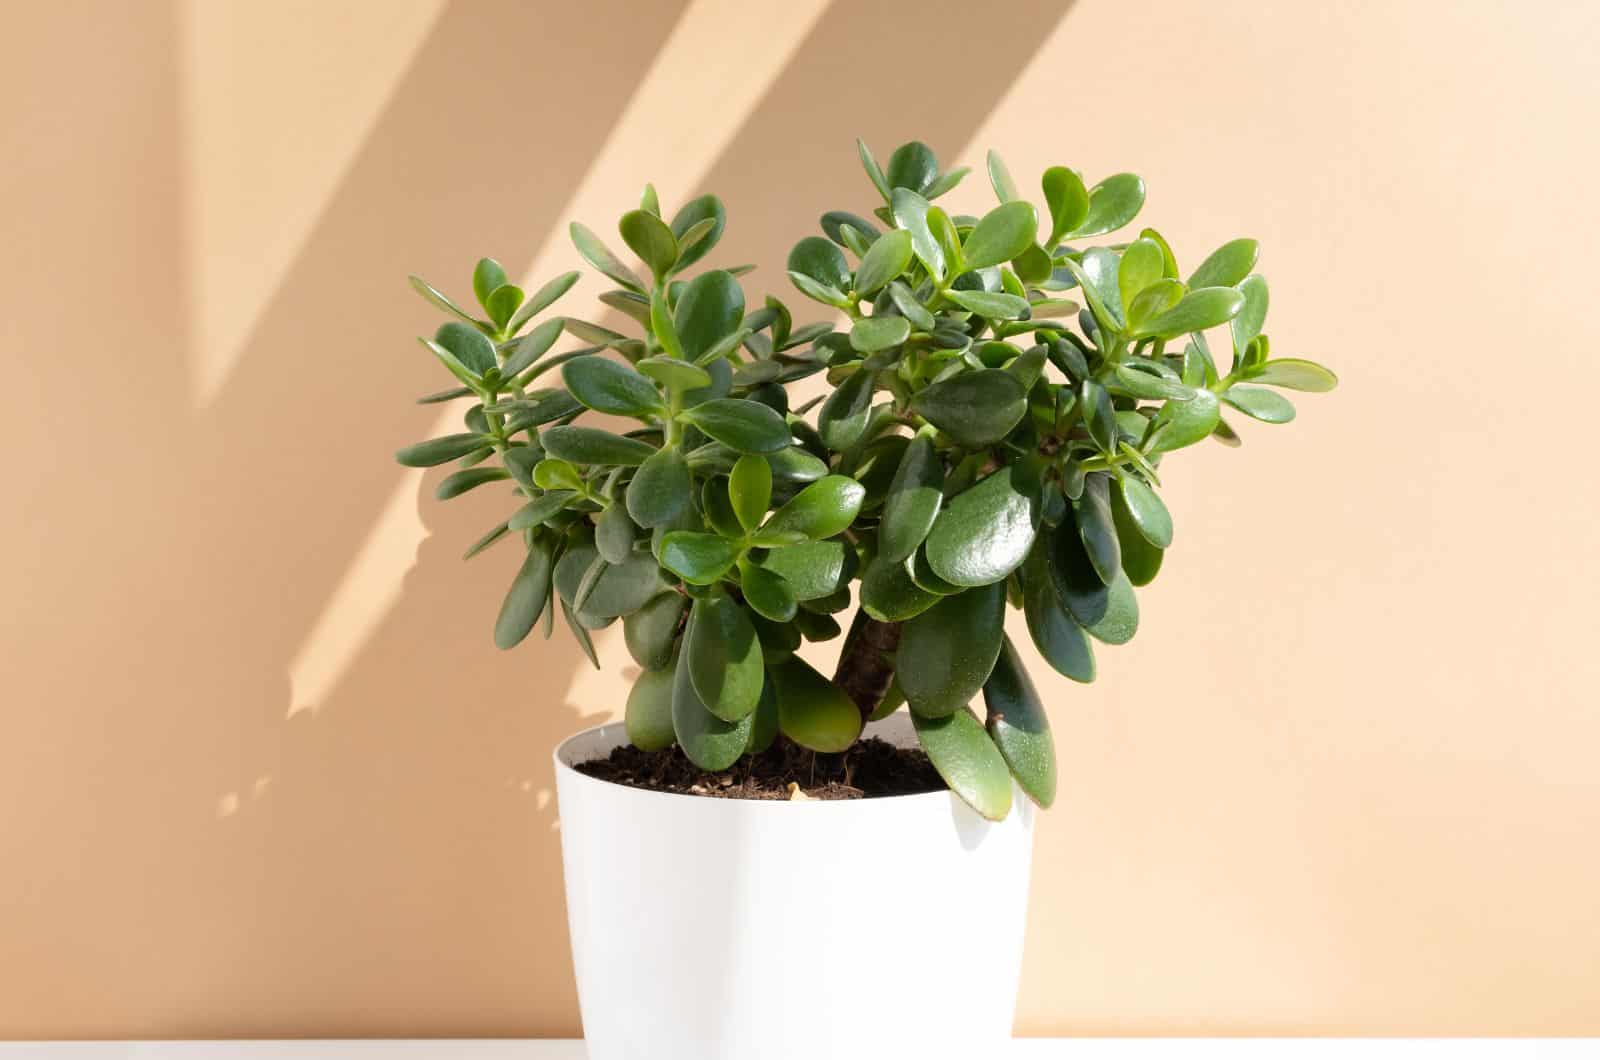 Jade Plant Benefits: Why You Should Grow A Crassula Ovata